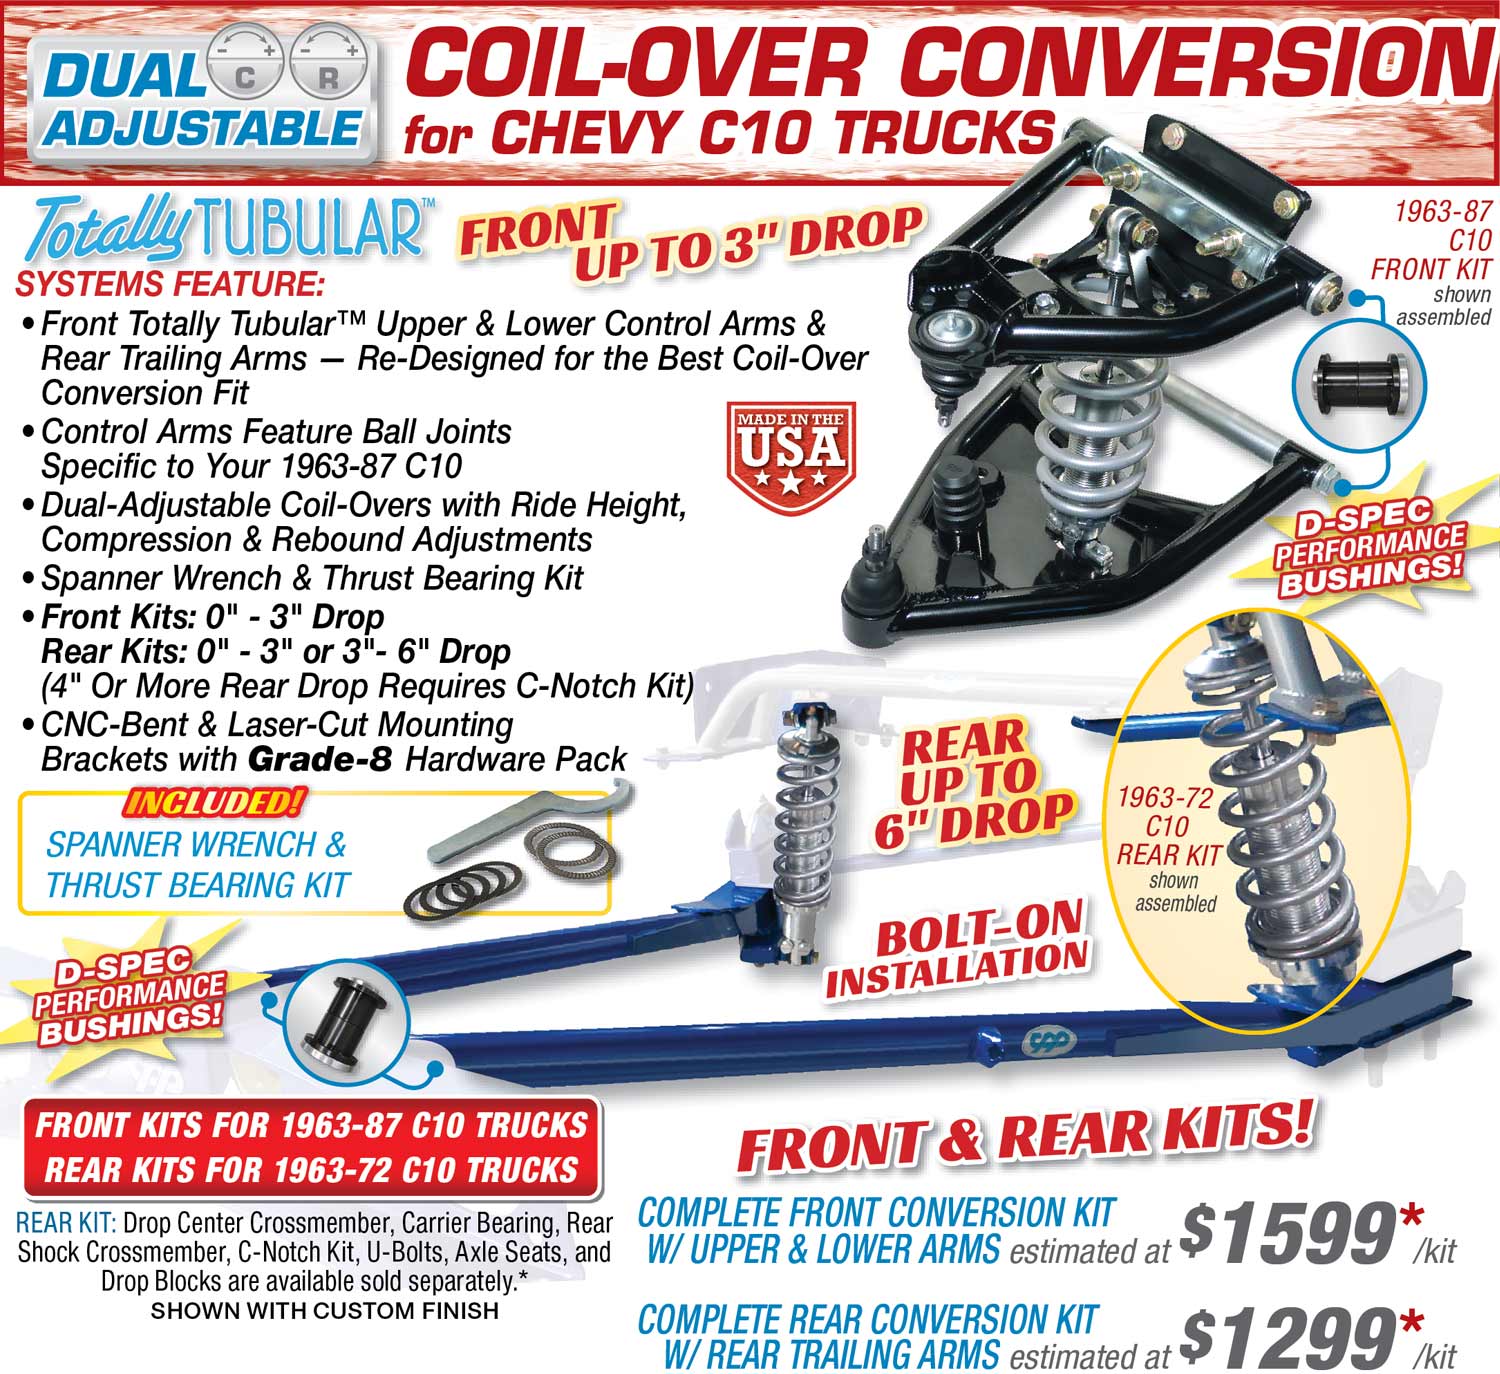 Coil-over Conversion